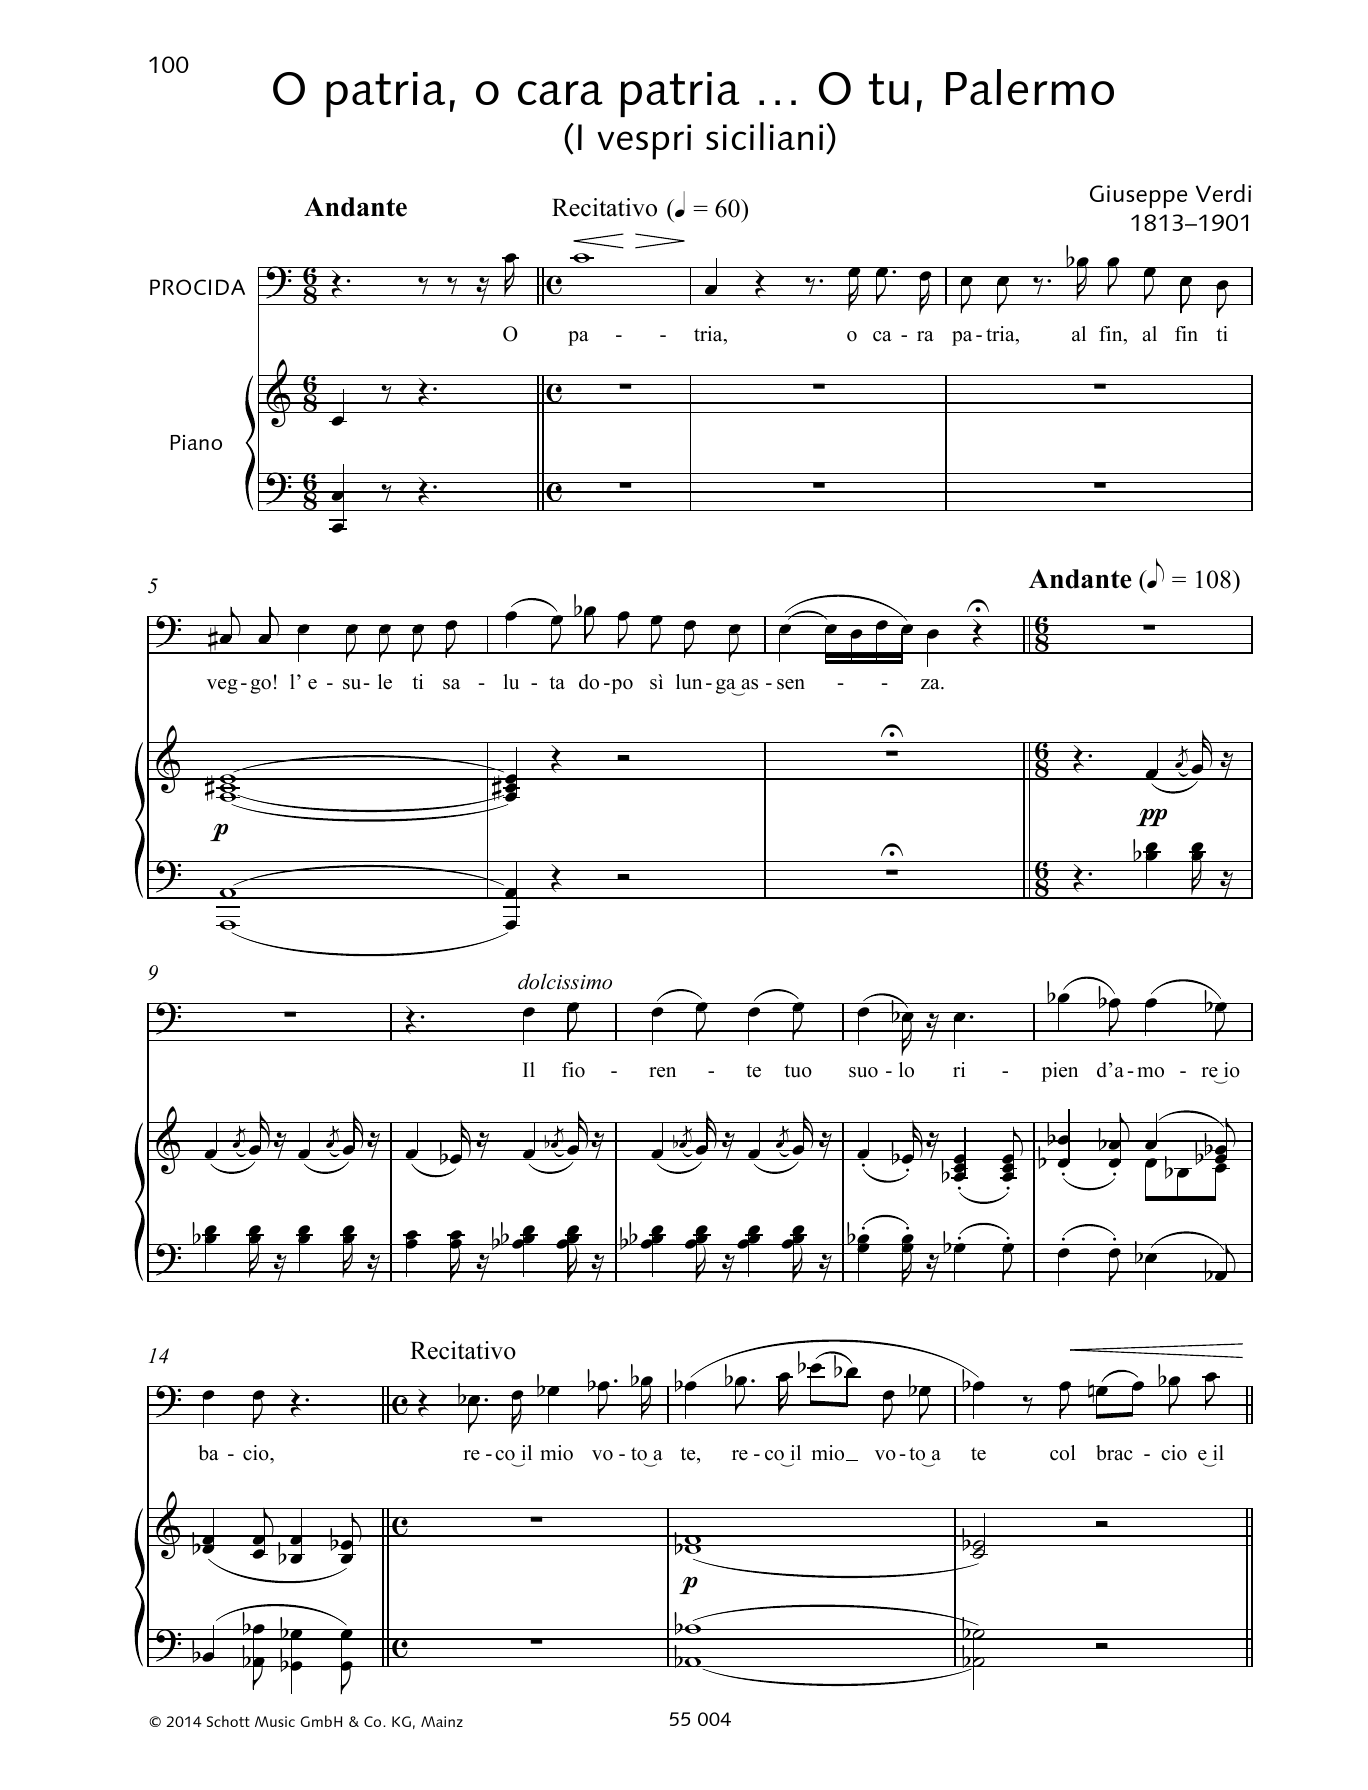 Download Giuseppe Verdi O patria, o cara patria... O tu, Palermo Sheet Music and learn how to play Piano & Vocal PDF digital score in minutes